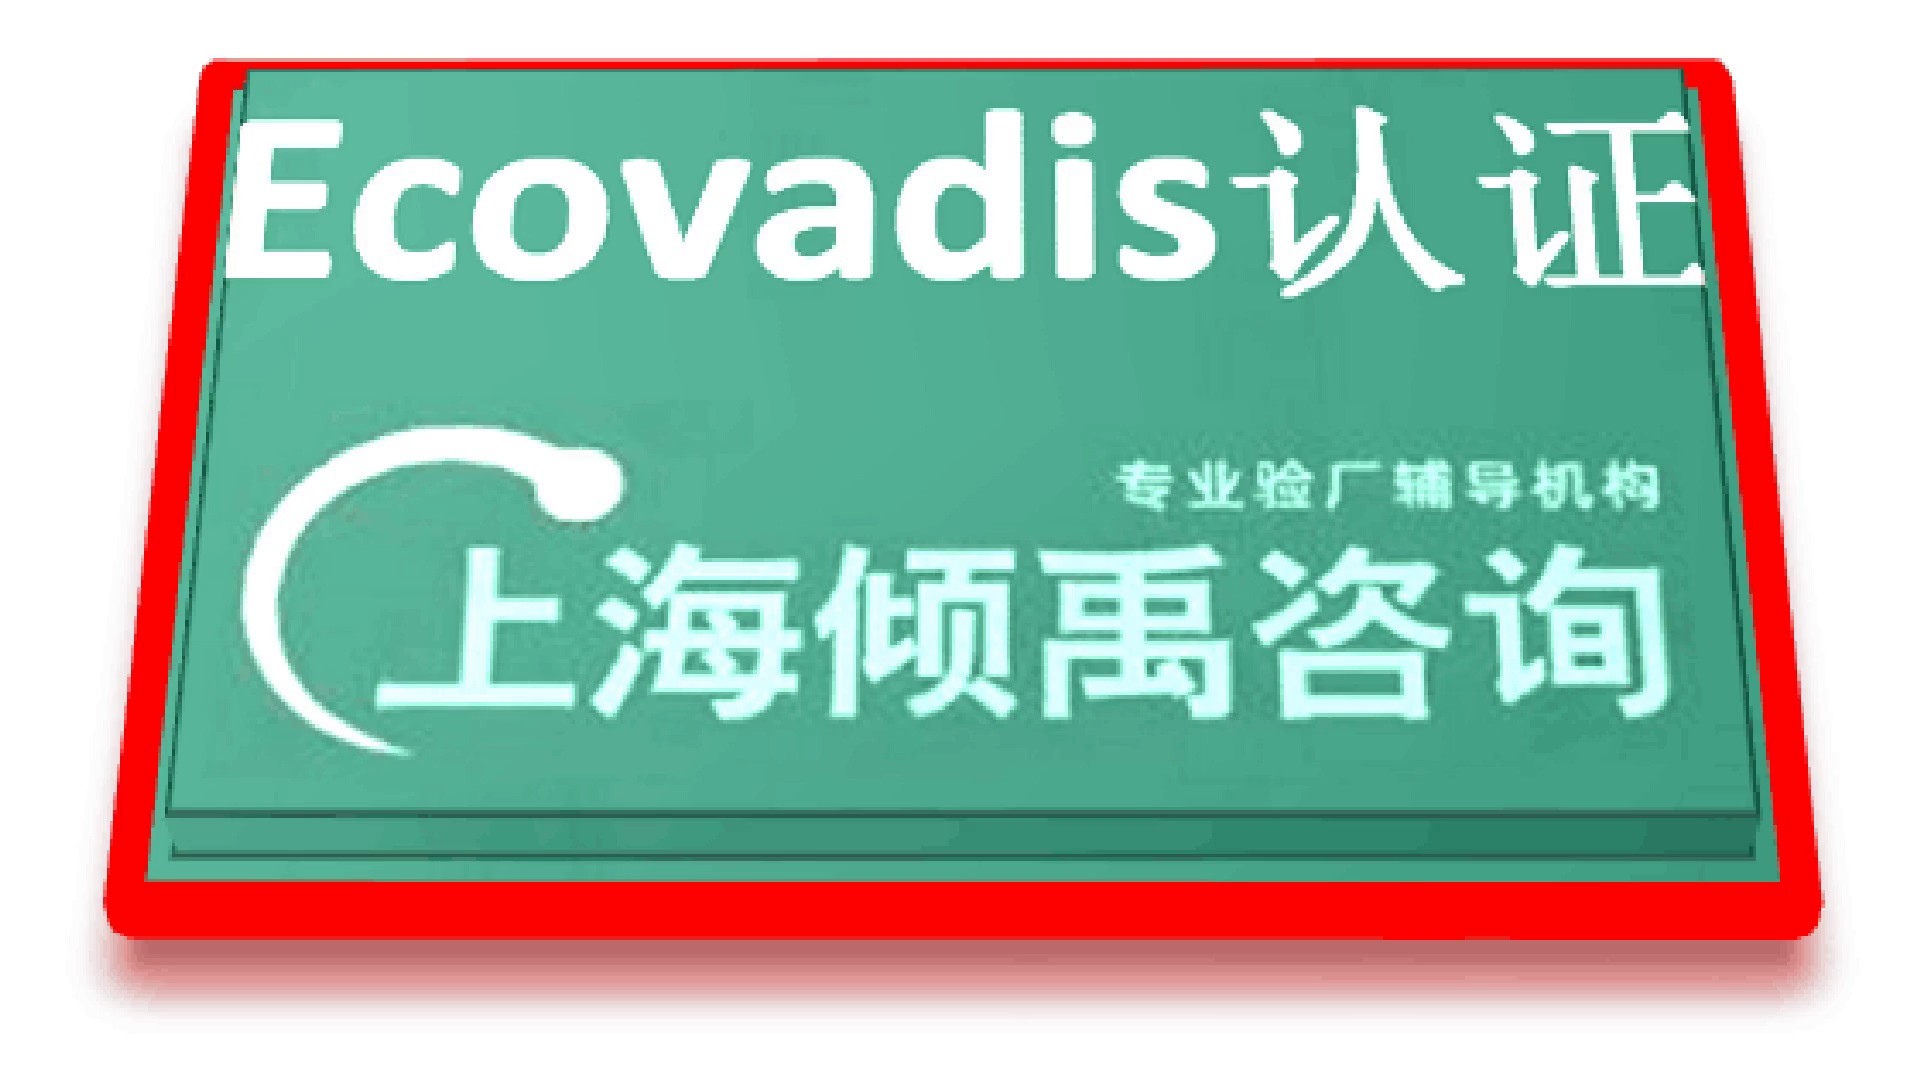 ISO13485认证ISO14000认证Ecovadis认证验厂顾问验厂协助,Ecovadis认证